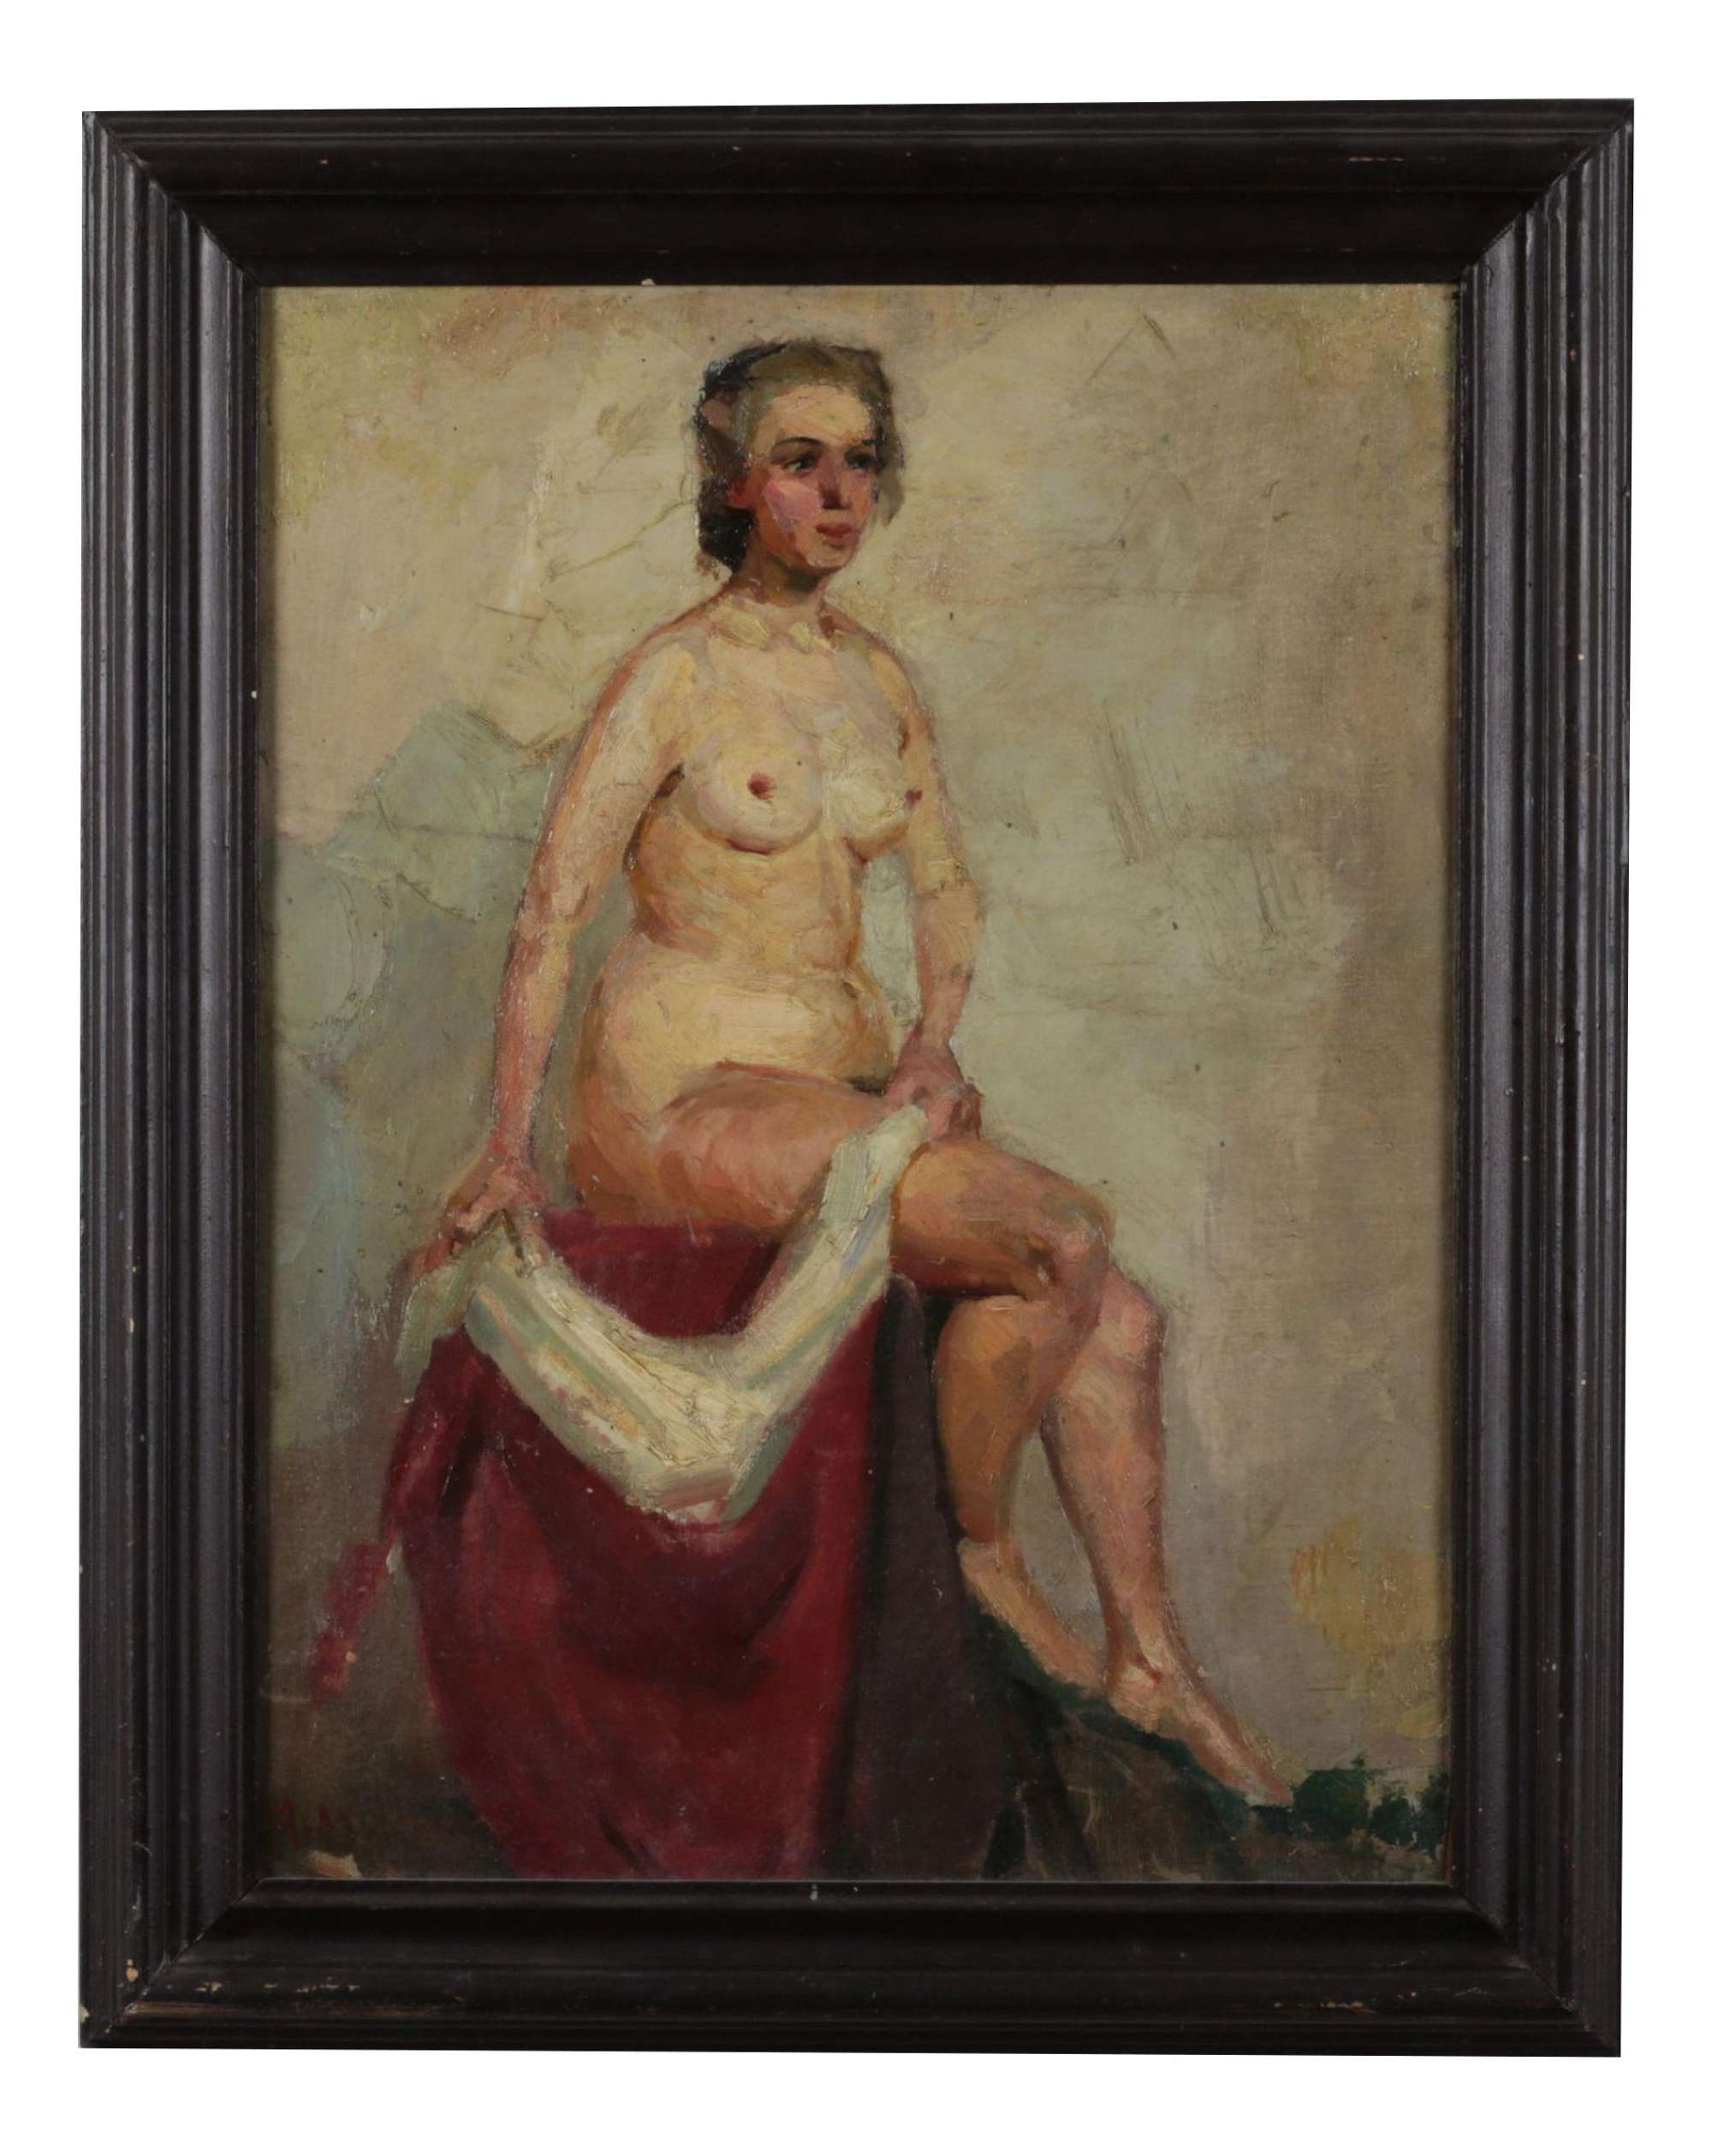 A Misurev, Nude, 20th Century, Oil on Canvas, Framed